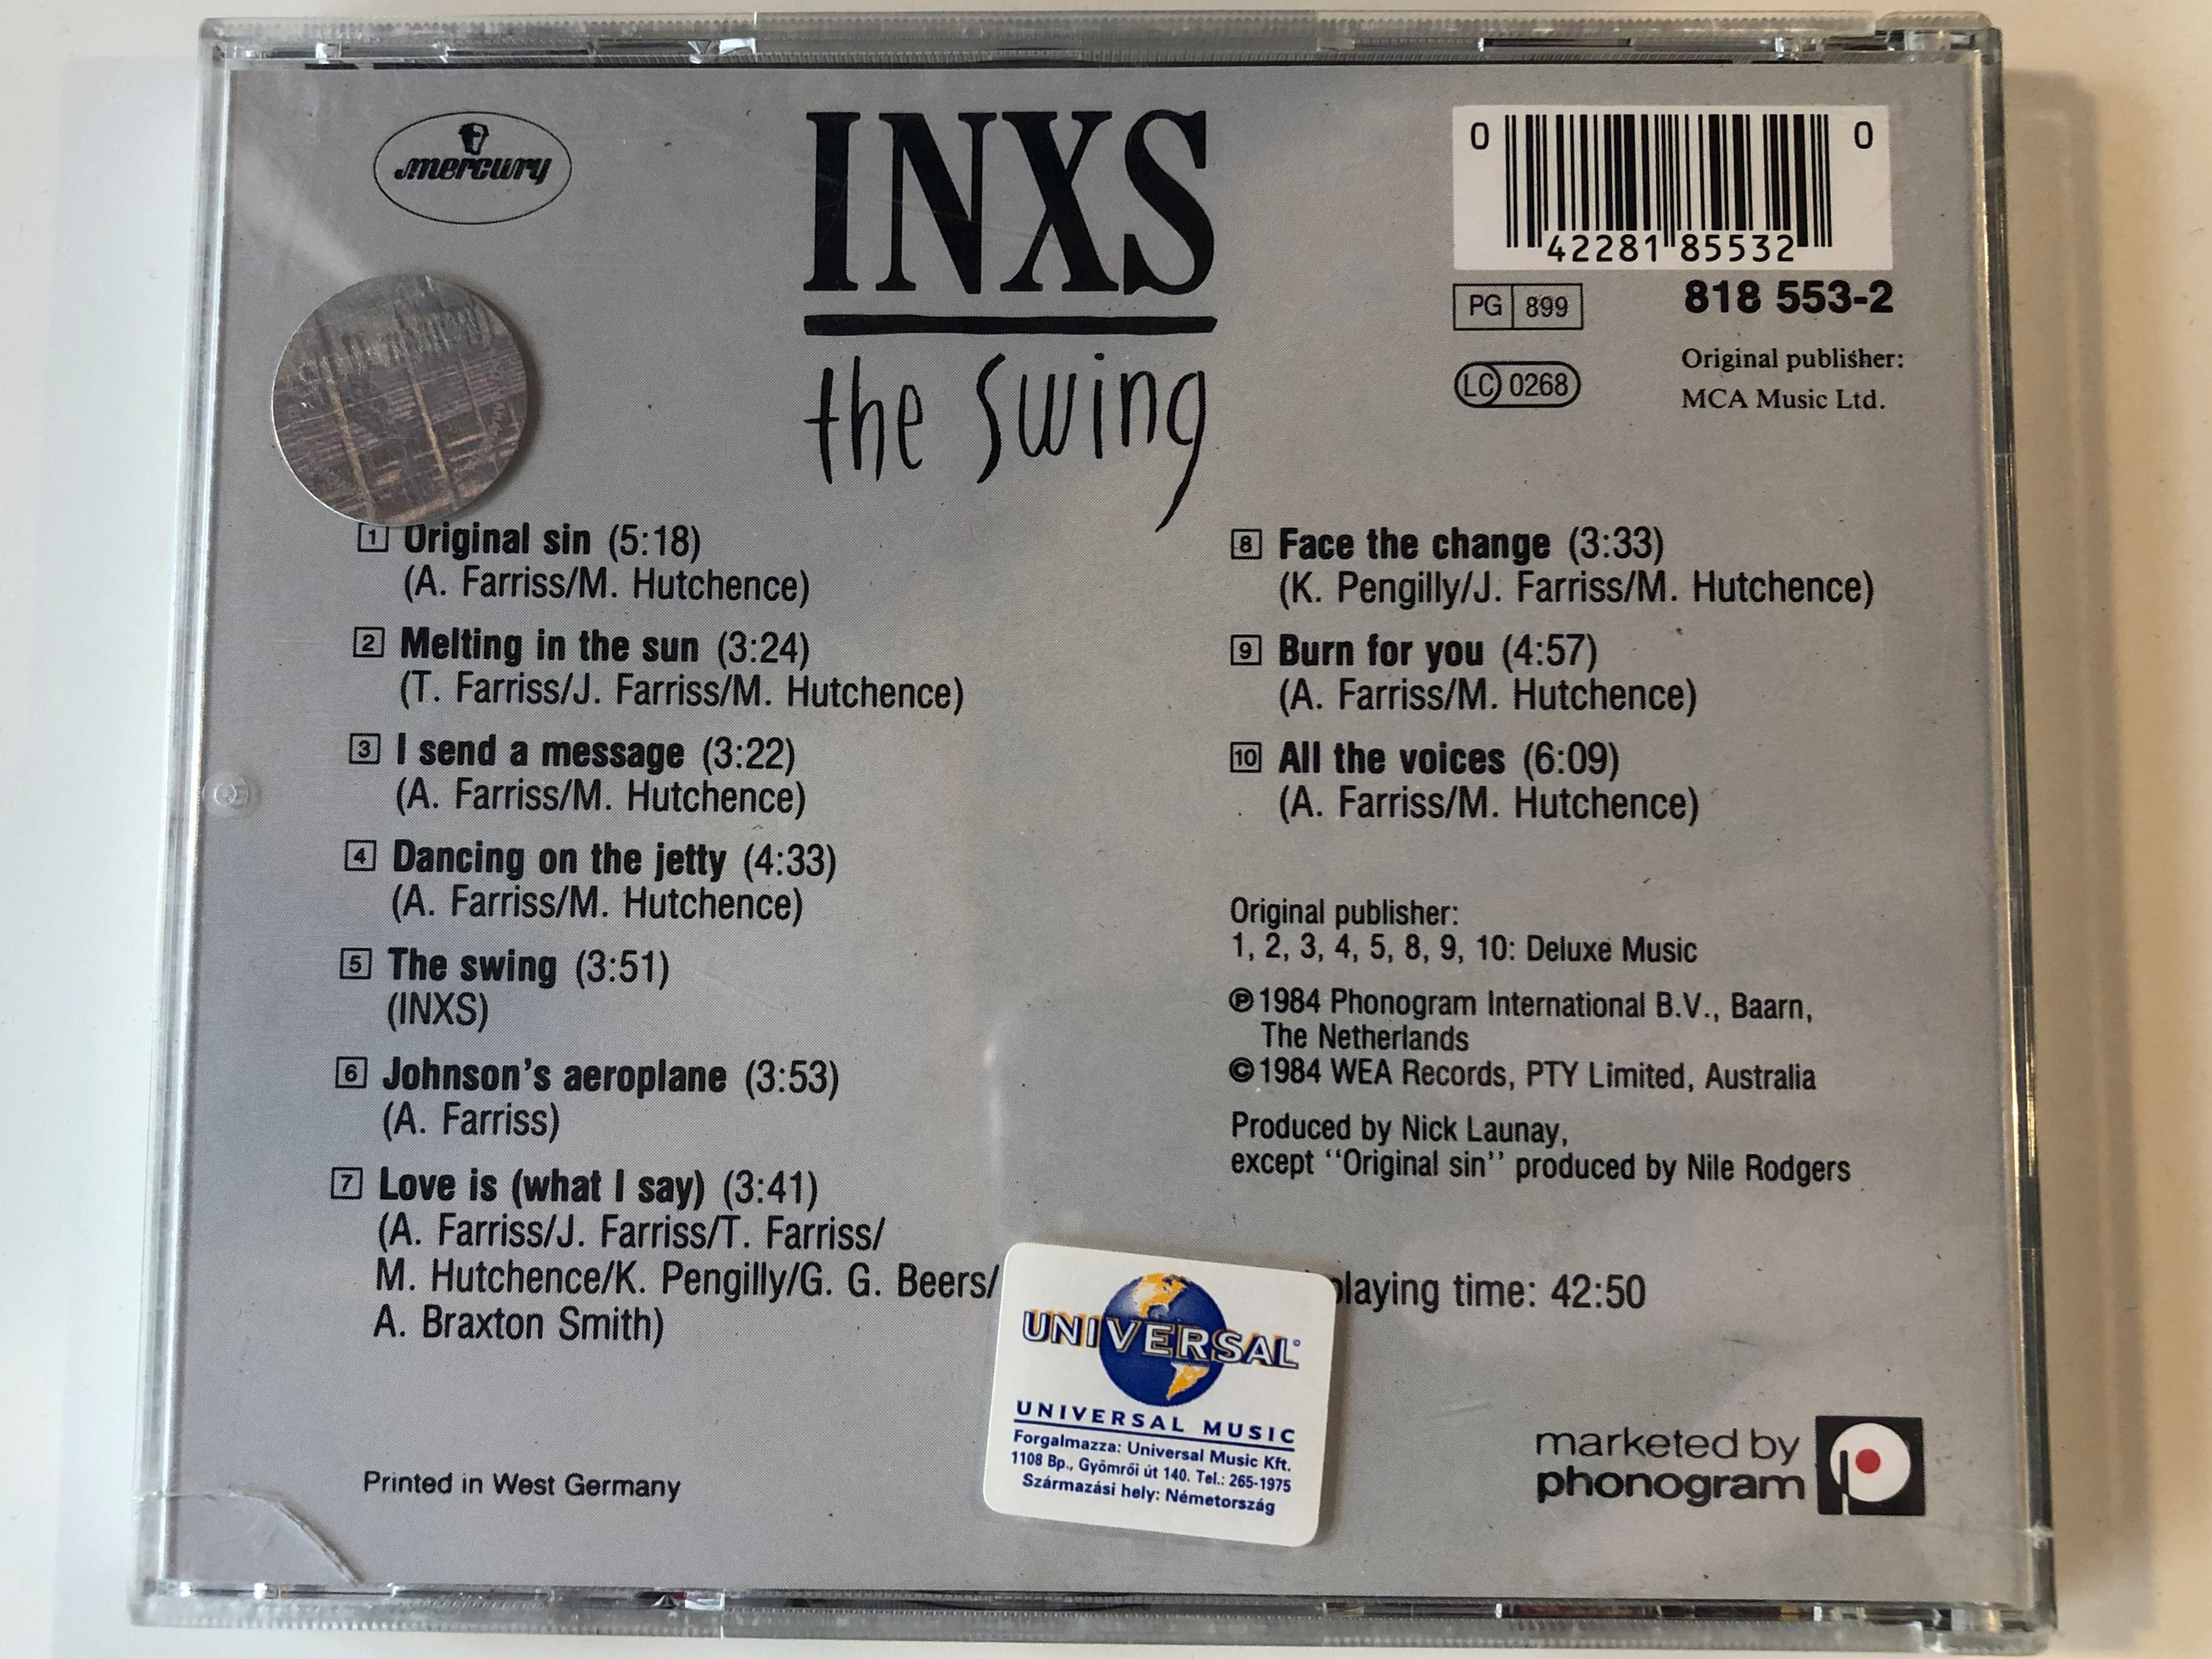 inxs-the-swing-mercury-audio-cd-818-553-2-2-.jpg